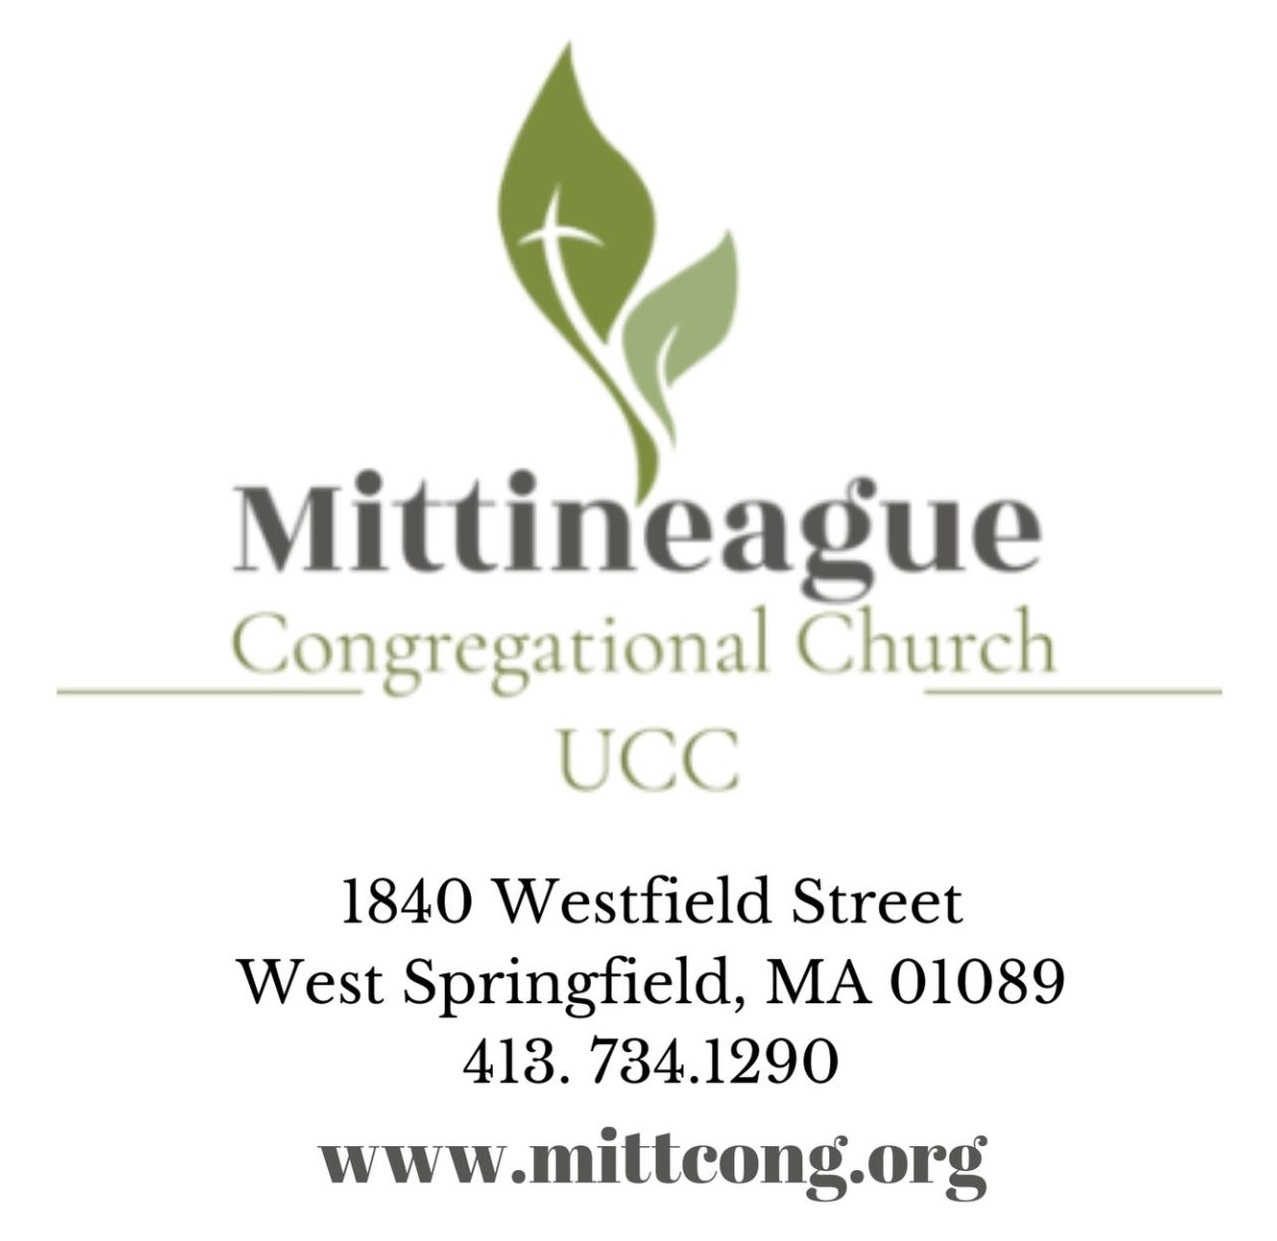 Mittineague Congregational Church logo